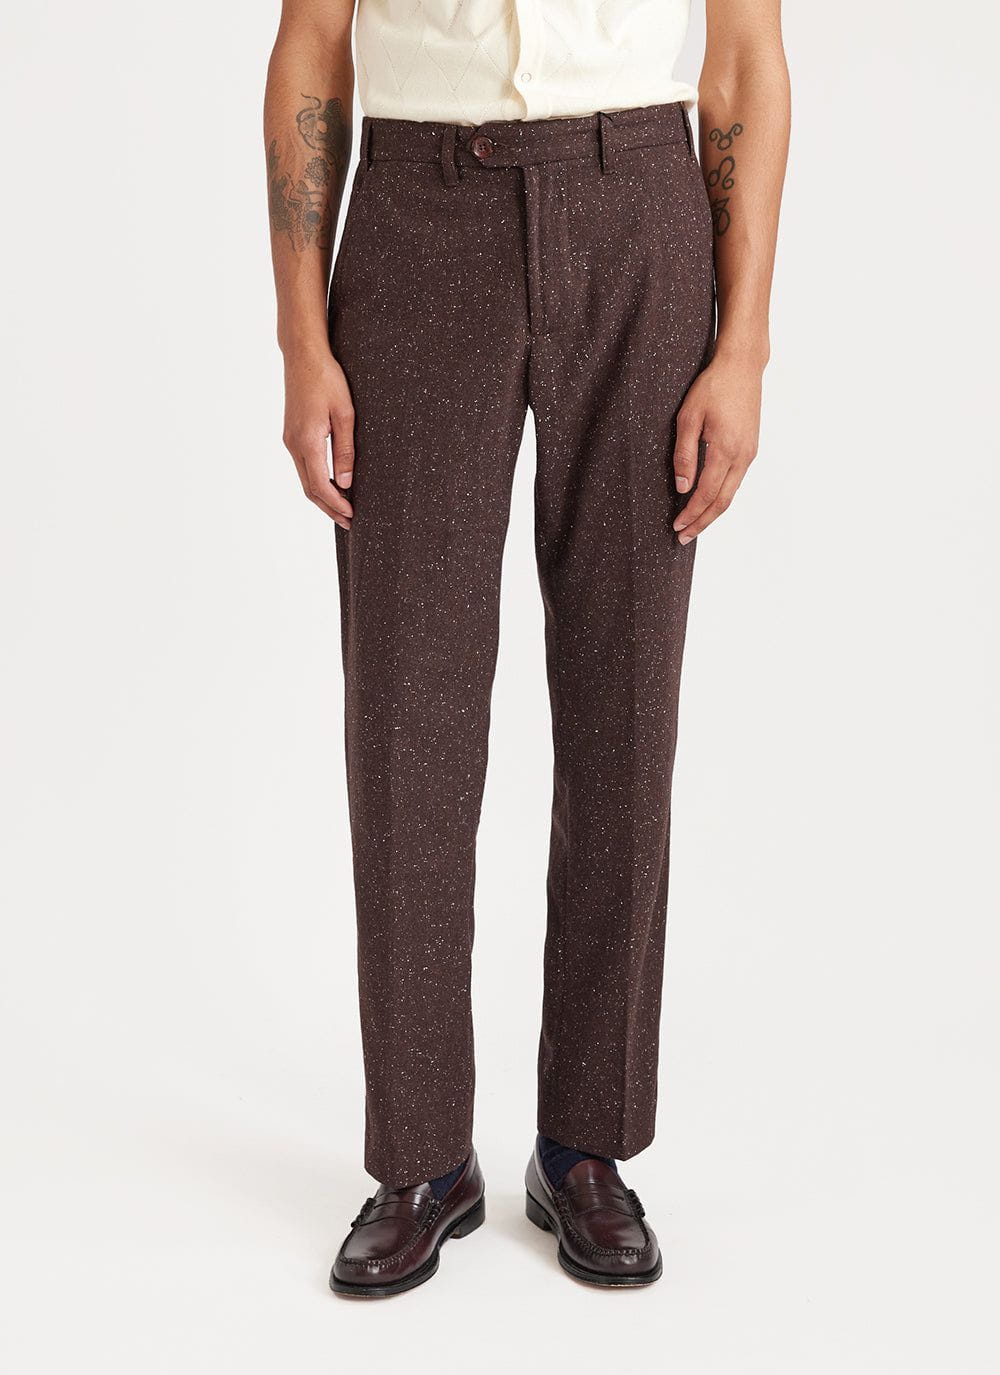 Woolly Clothing Women's Merino Wool Longhaul Weekender Pants - Camel Beige  - XS at Amazon Women's Clothing store